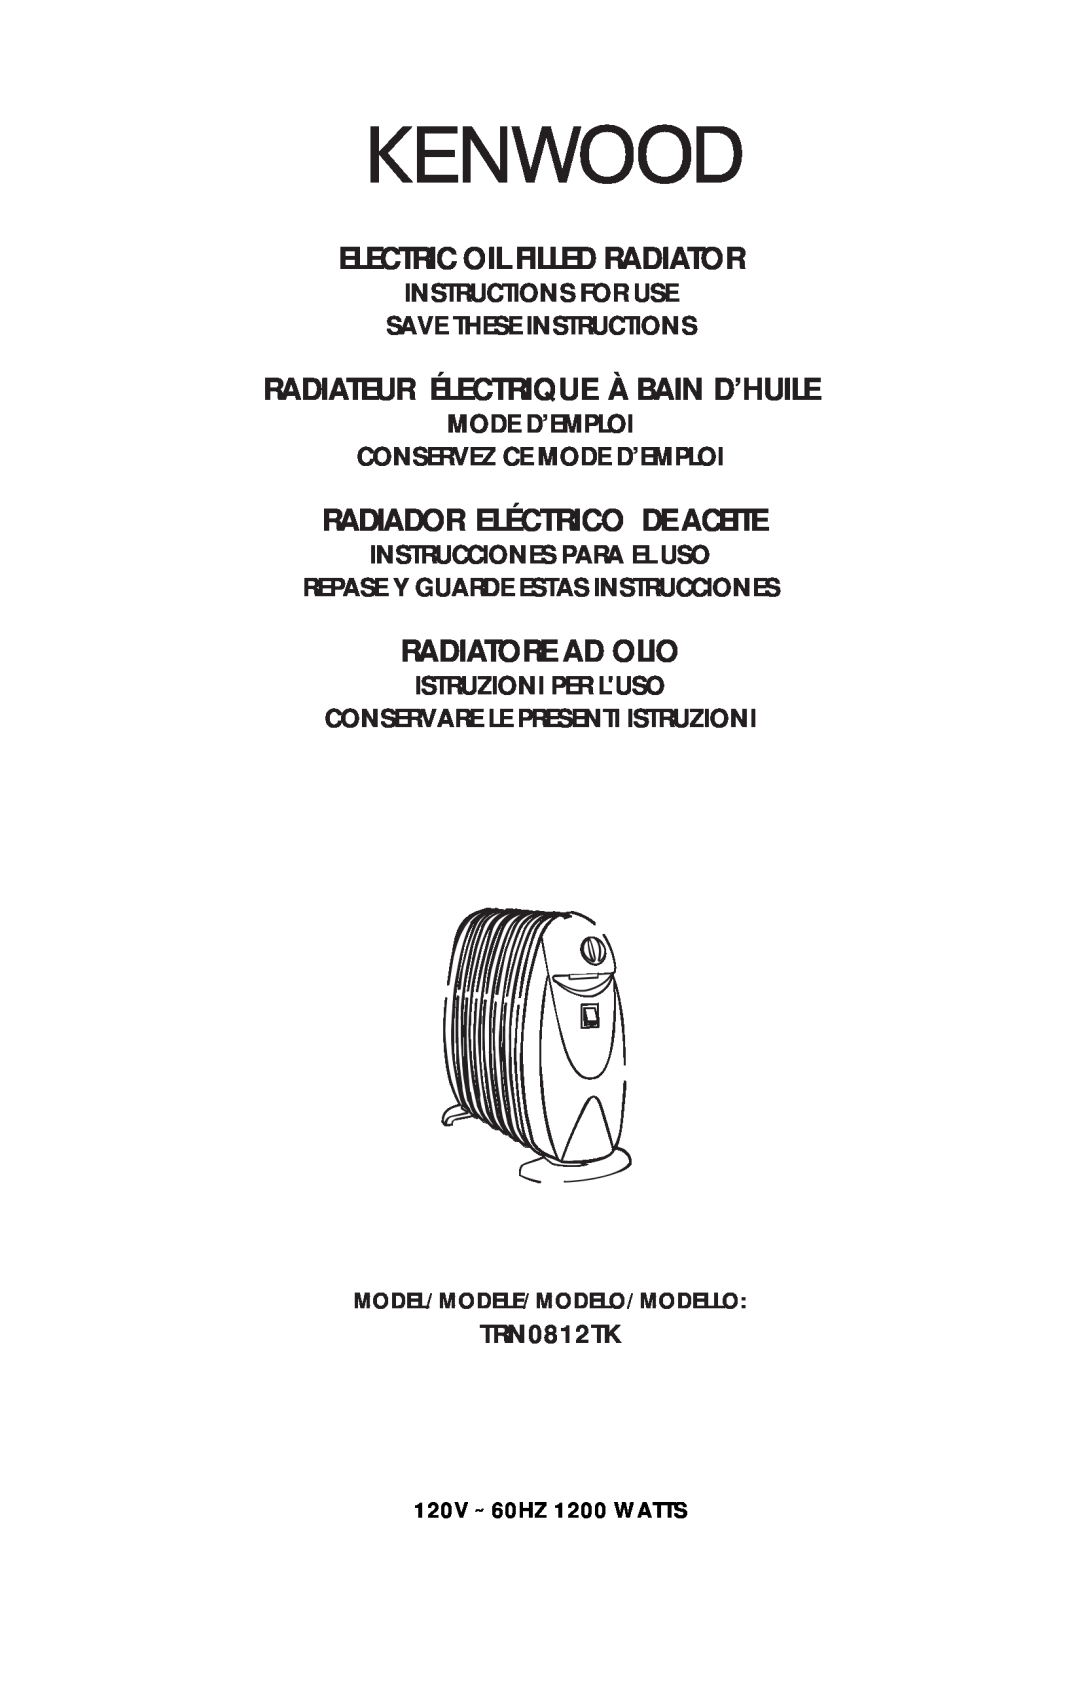 Kenwood trn0812tk manual Electric Oil Filled Radiator, Radiateur Électrique À Bain D’Huile, Radiador Eléctrico De Aceite 